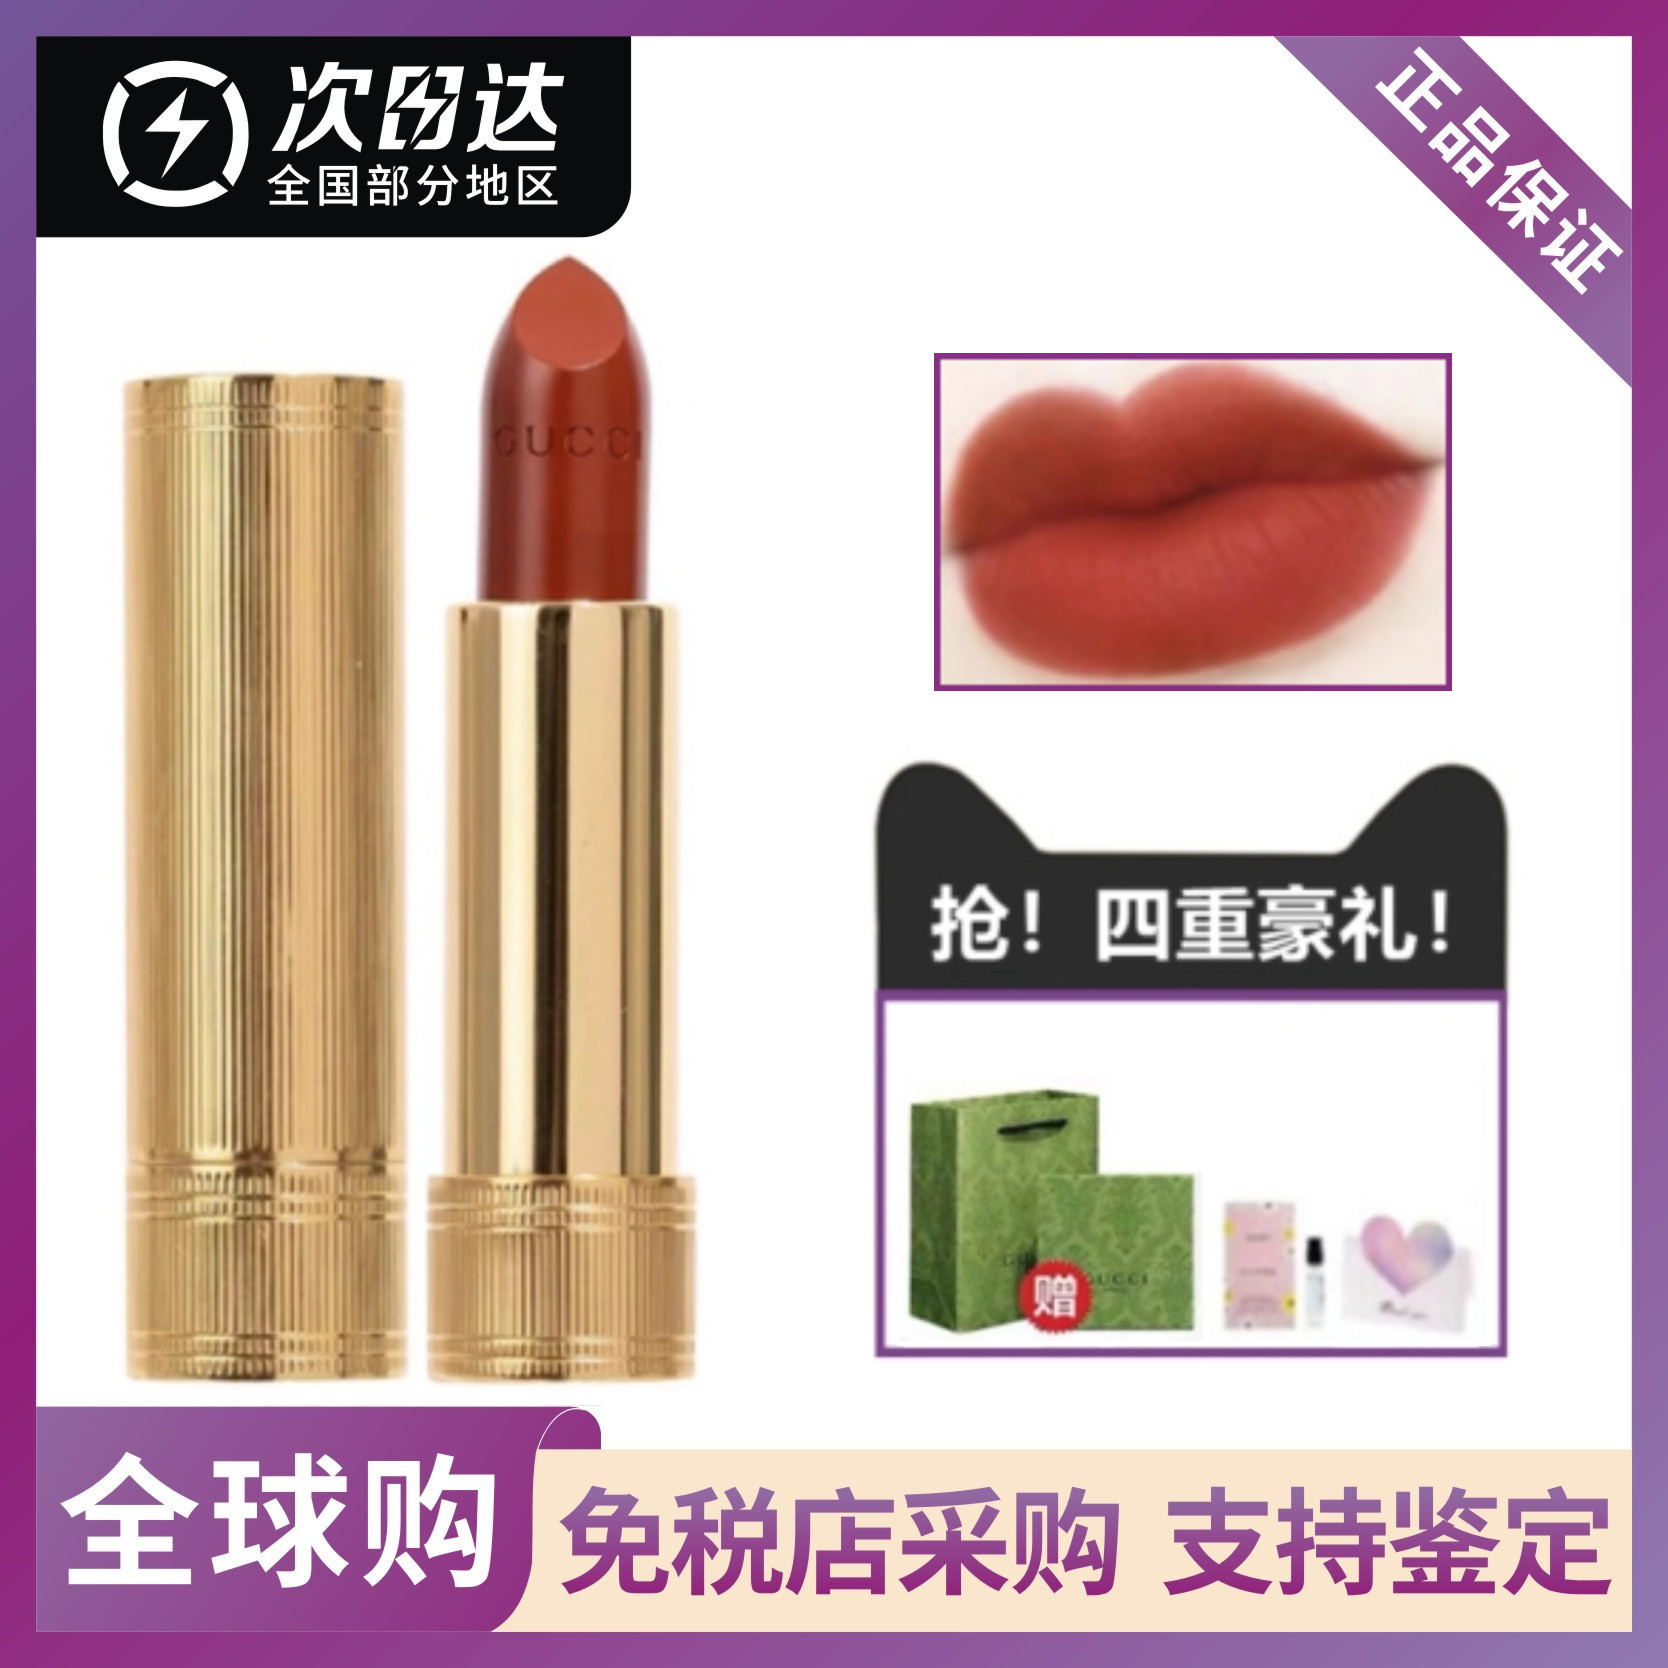 Gucci Gucci Lipstick 505 Matte Gold Tube 208/25 Moisturizing Colorful Velvet Mist lipstick Big Brand Genuine Gift Box